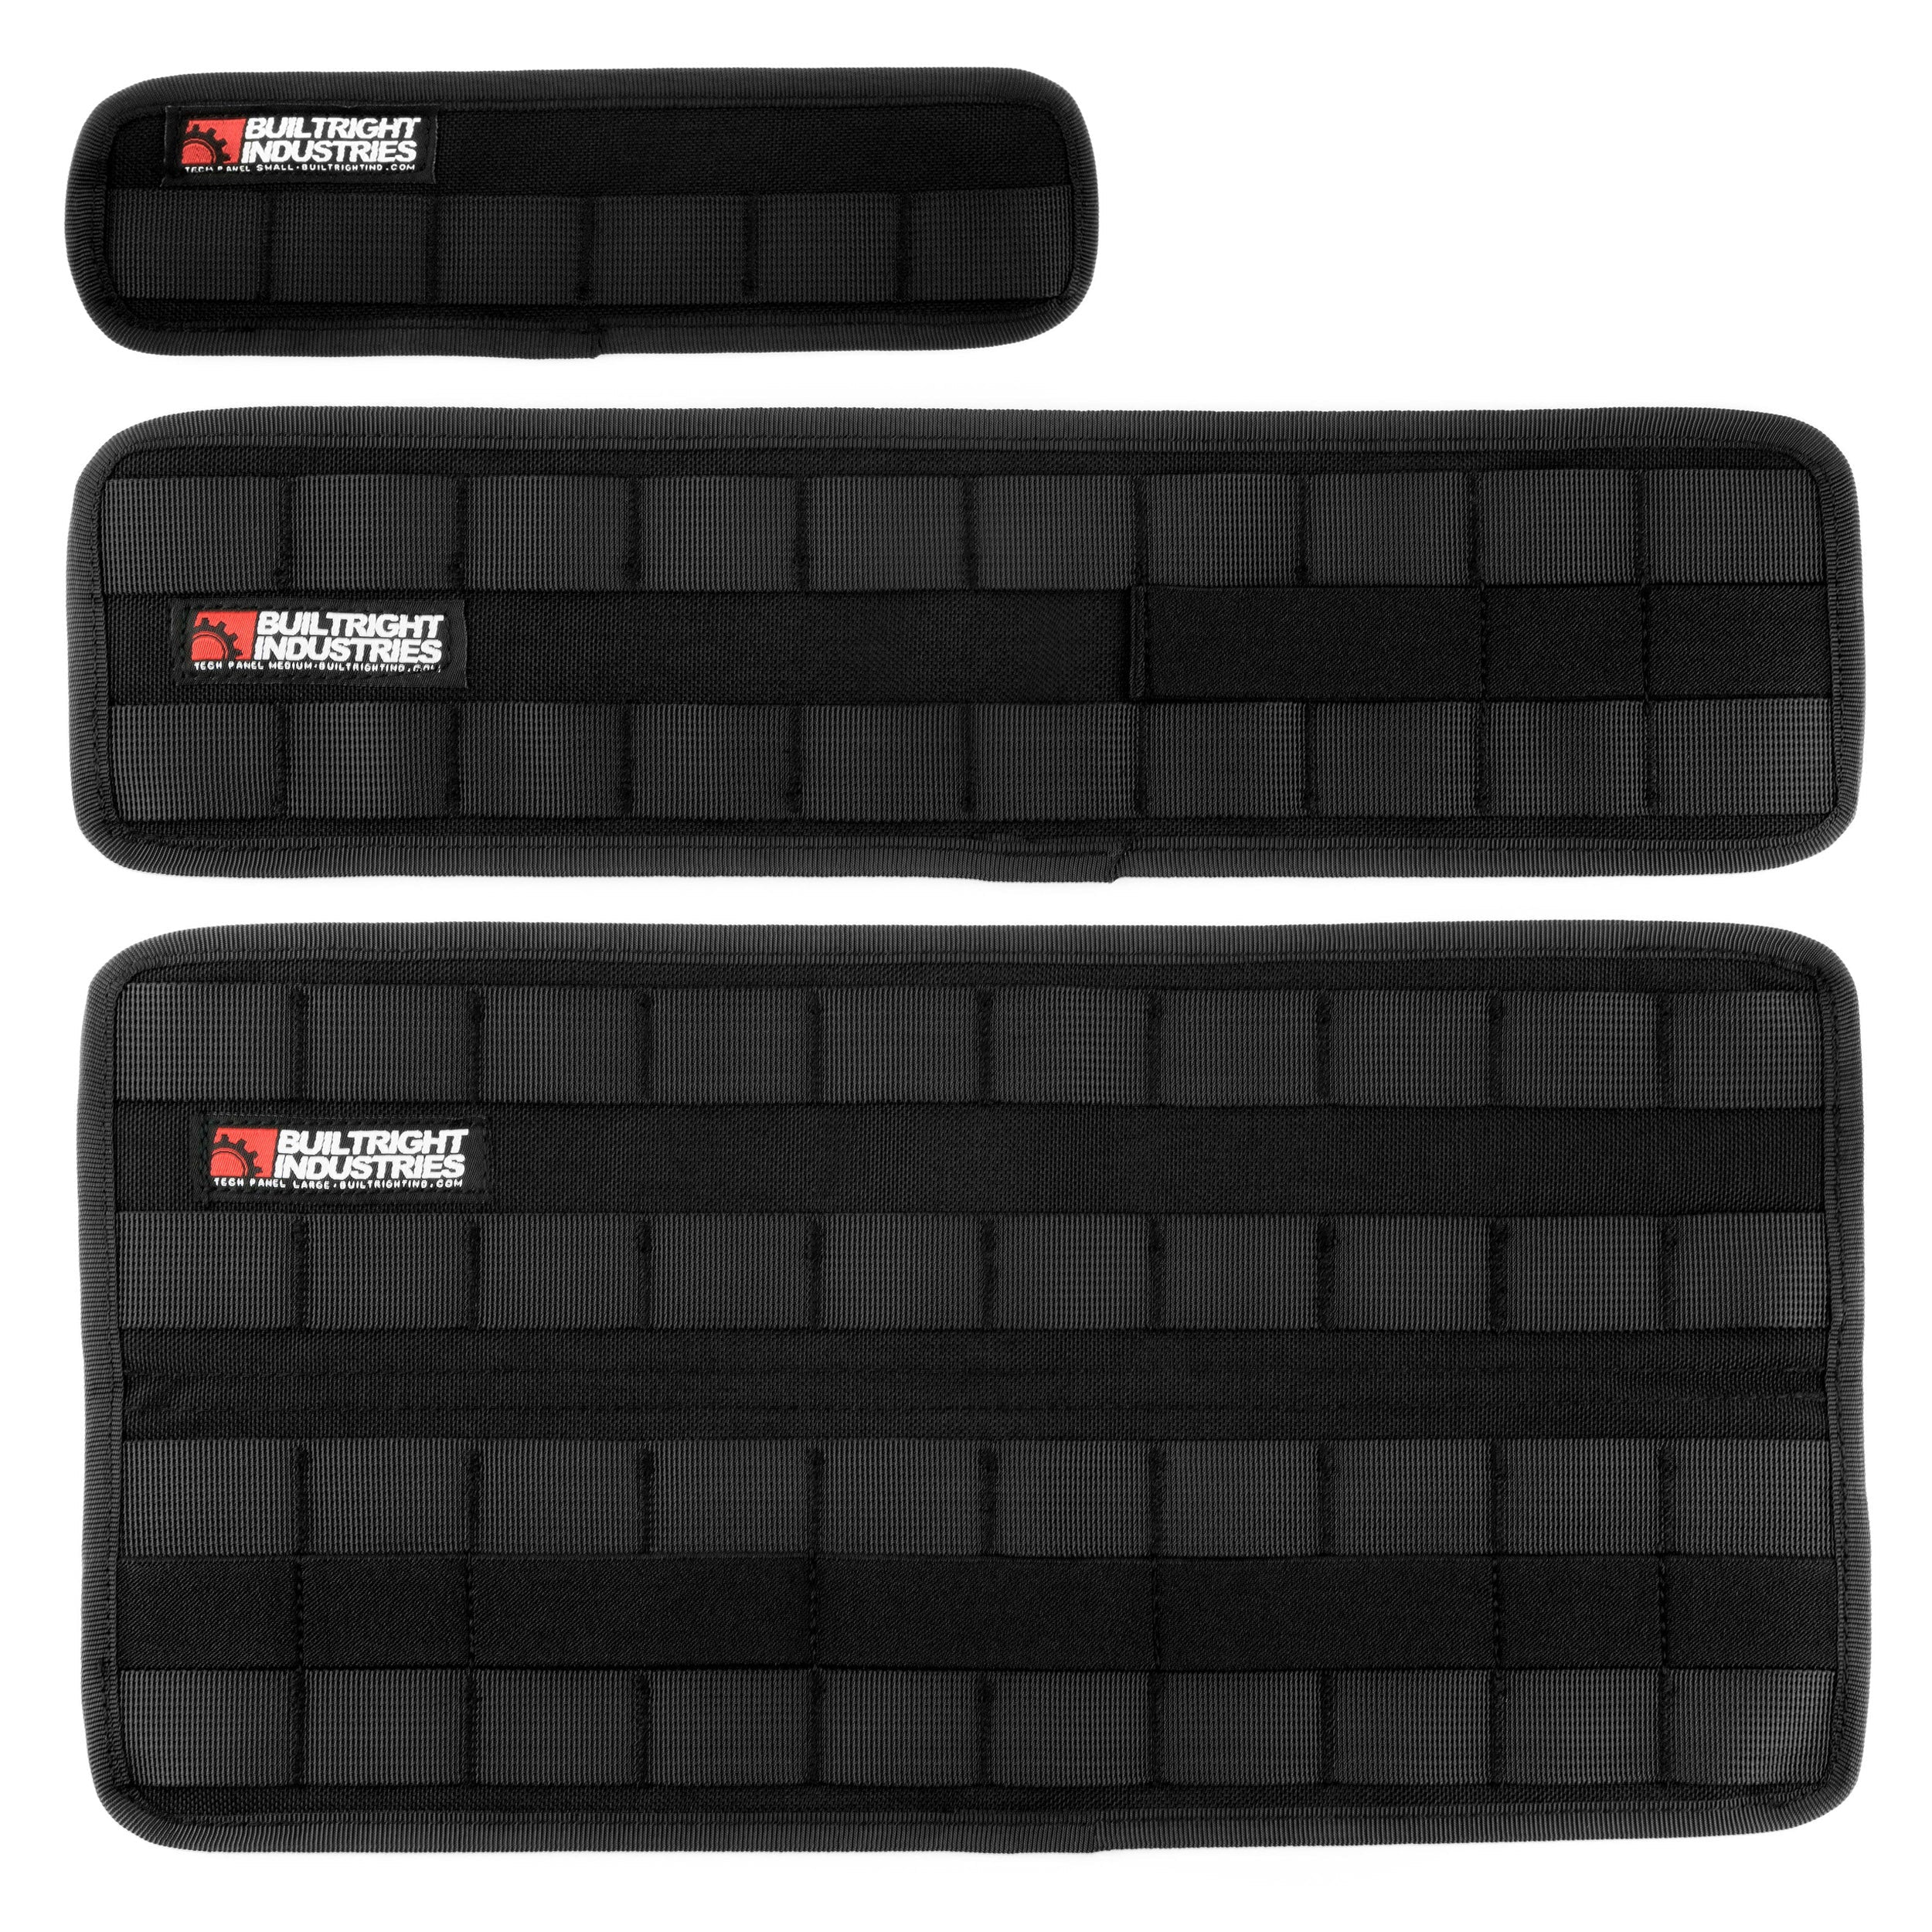 BuiltRight Industries Velcro Tech Panel - Black | 3pc Kit